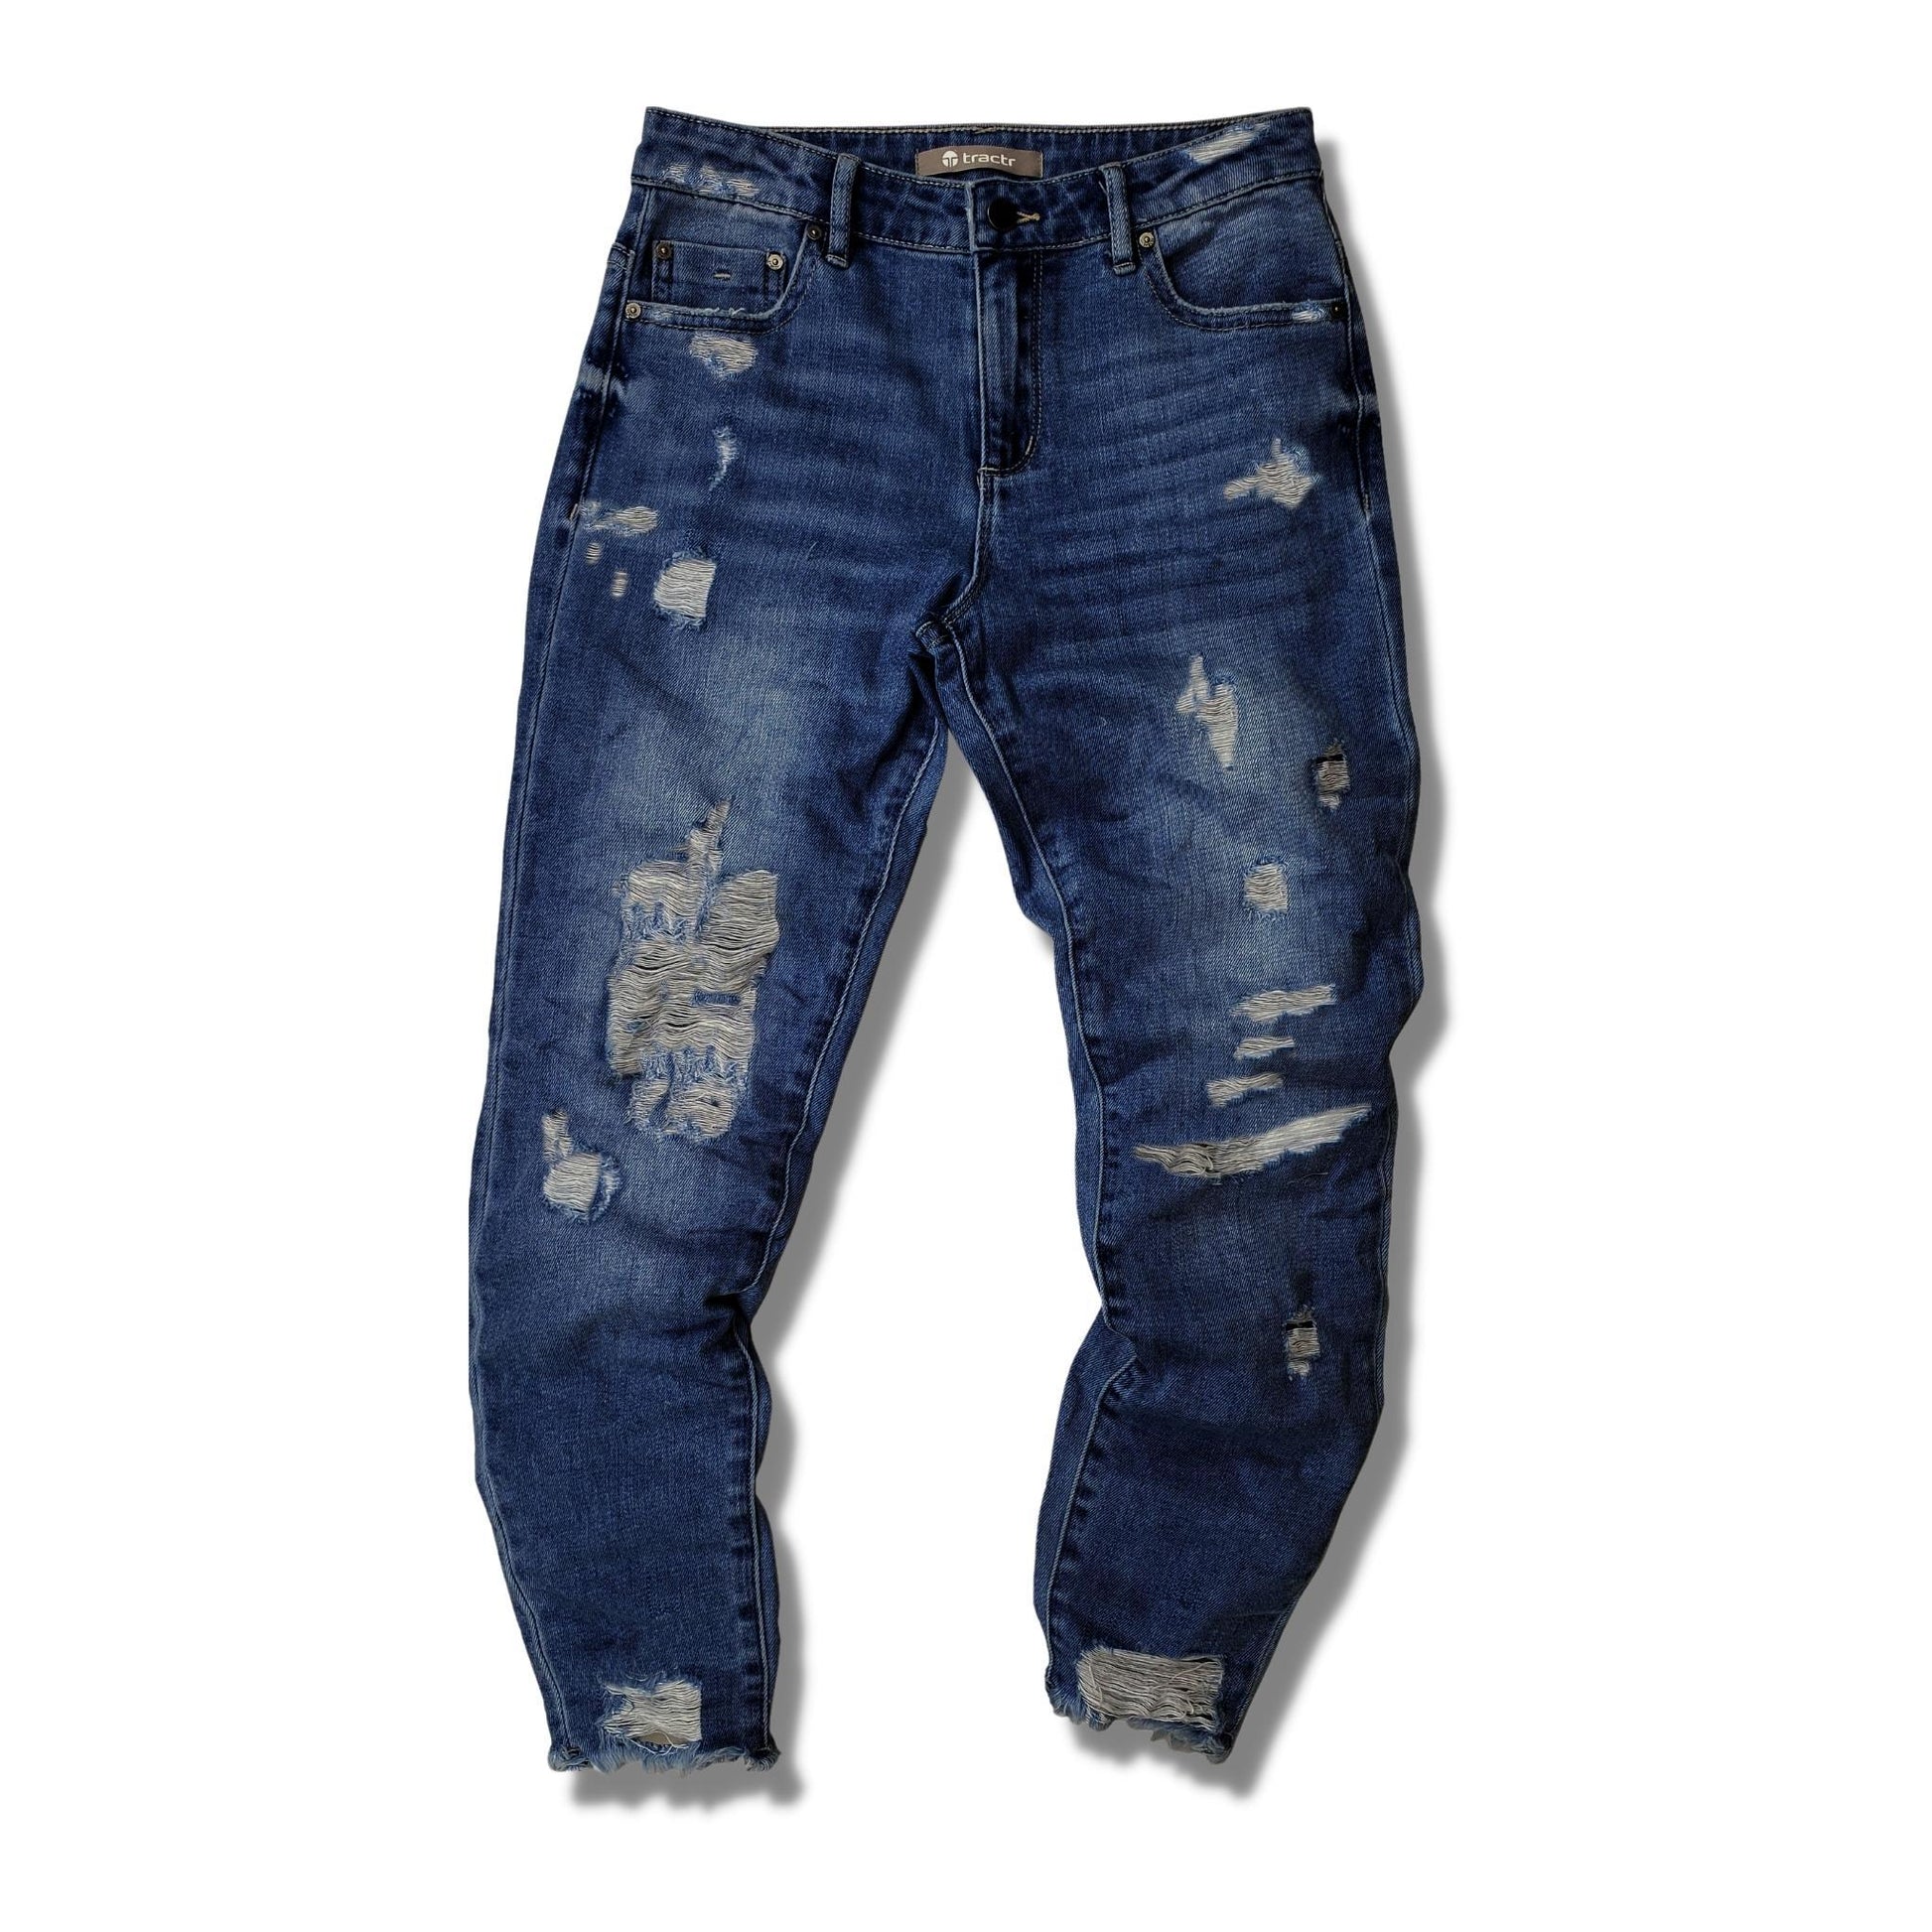 Tractr Indigo Destructed Weekender Pants - a Spirit Animal - Pants $45-$60 Juniors Pants